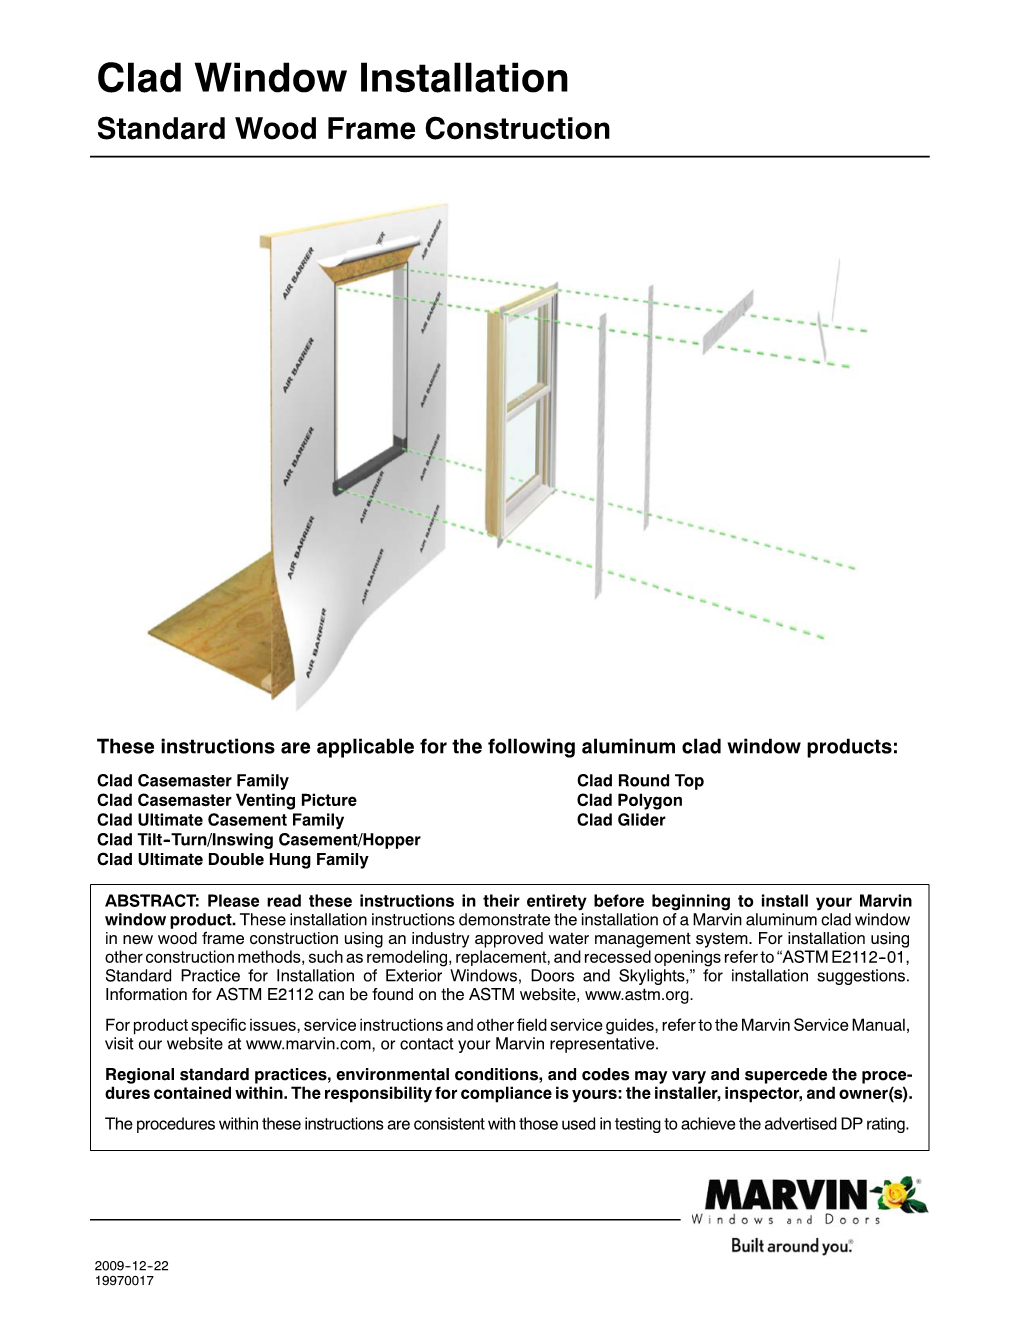 Clad Window Installation Standard Wood Frame Construction